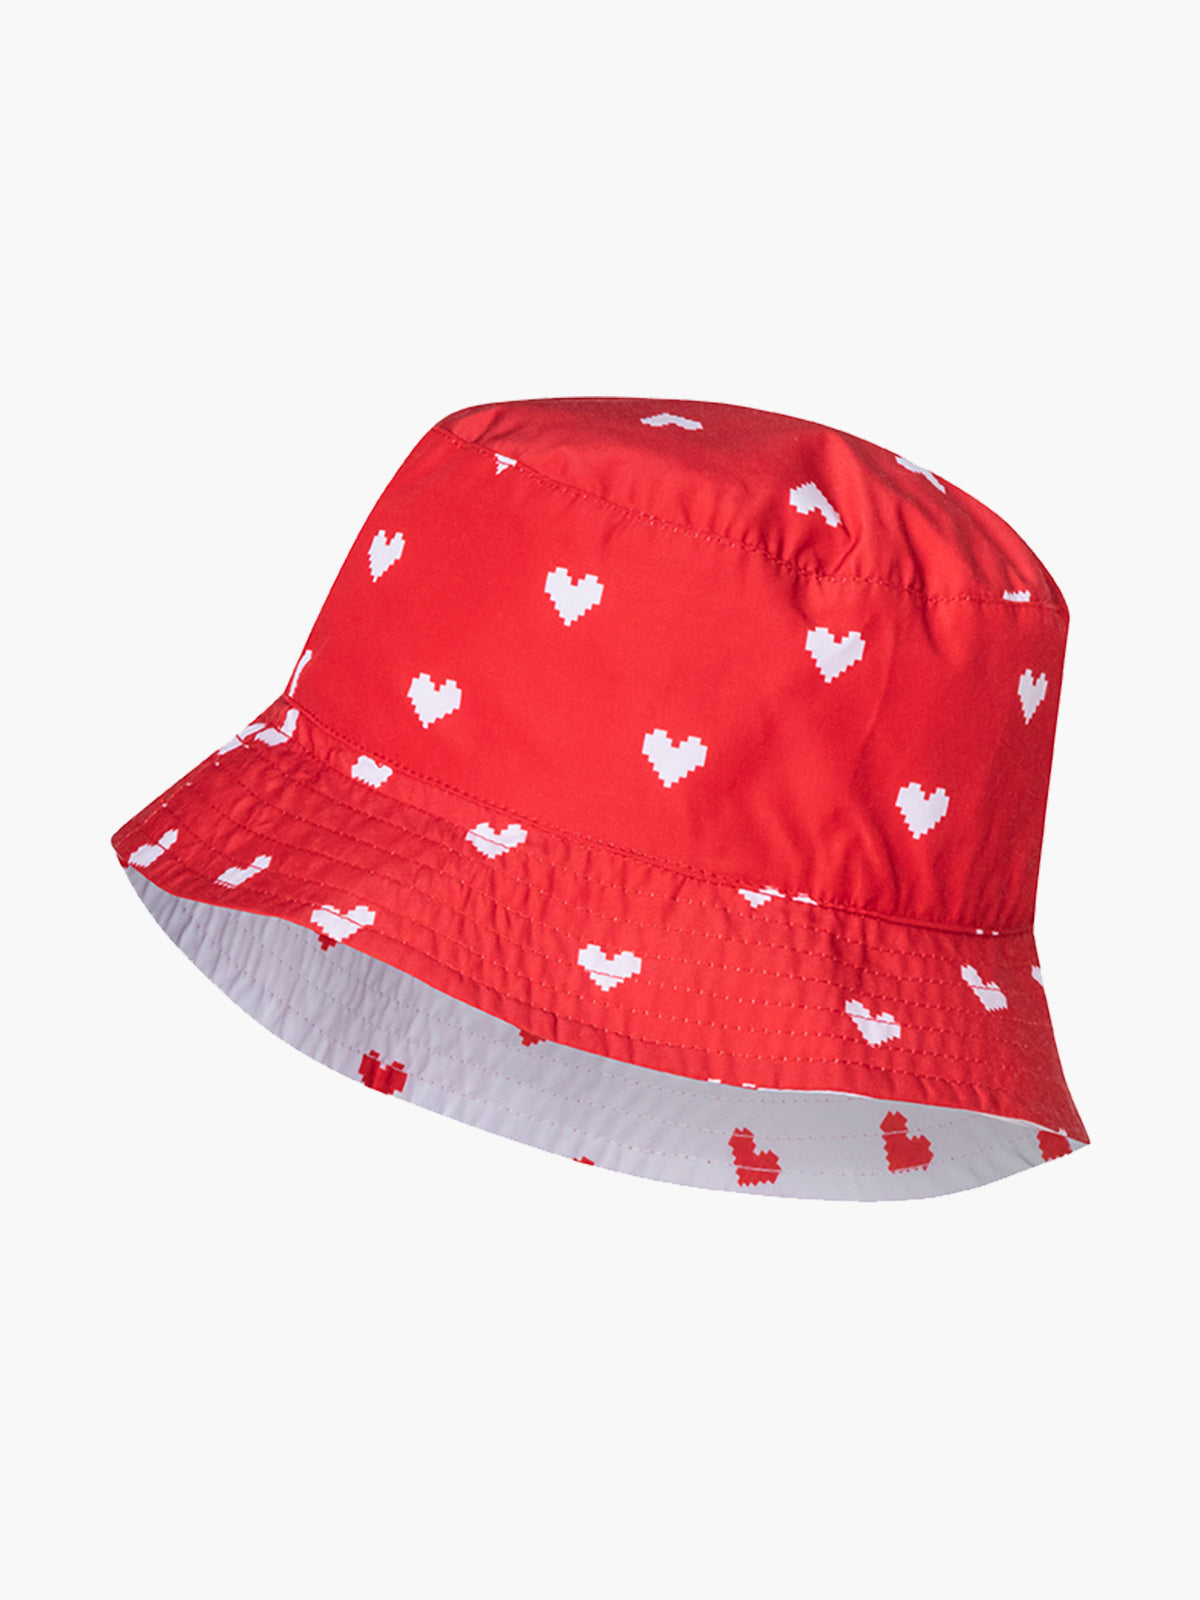 Bucket Hat | Red/White Pixel Hearts